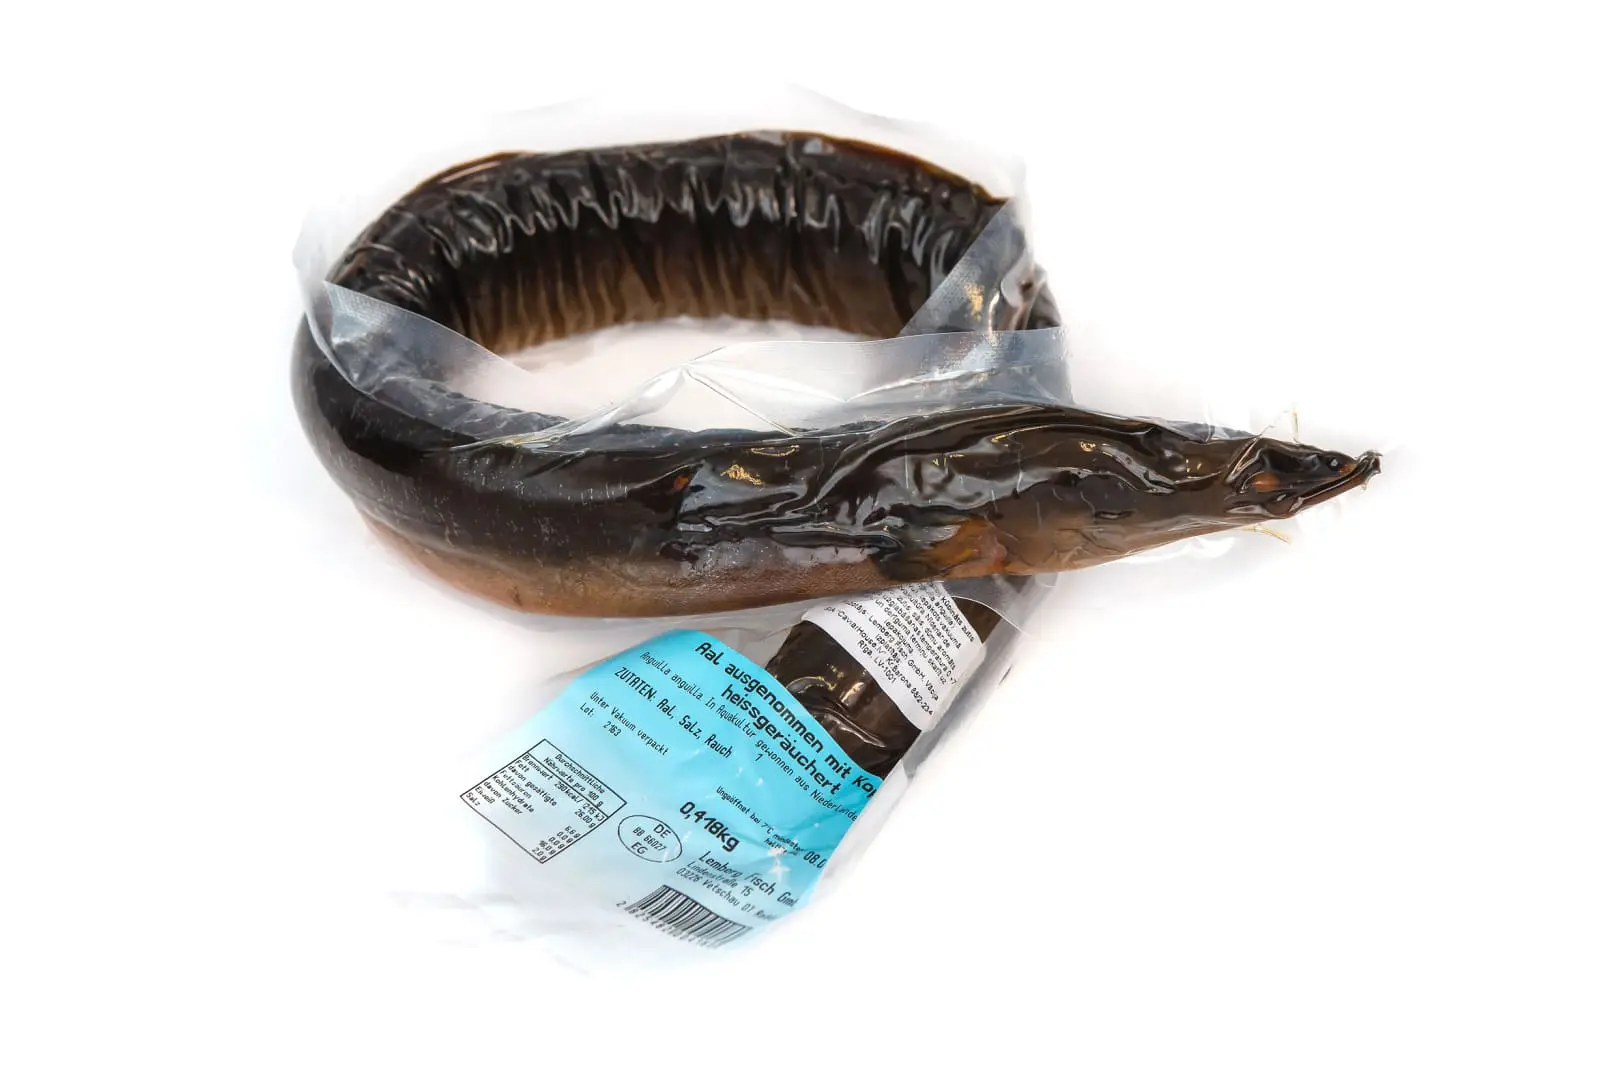 smoked conger eel - Is conger eel good to eat